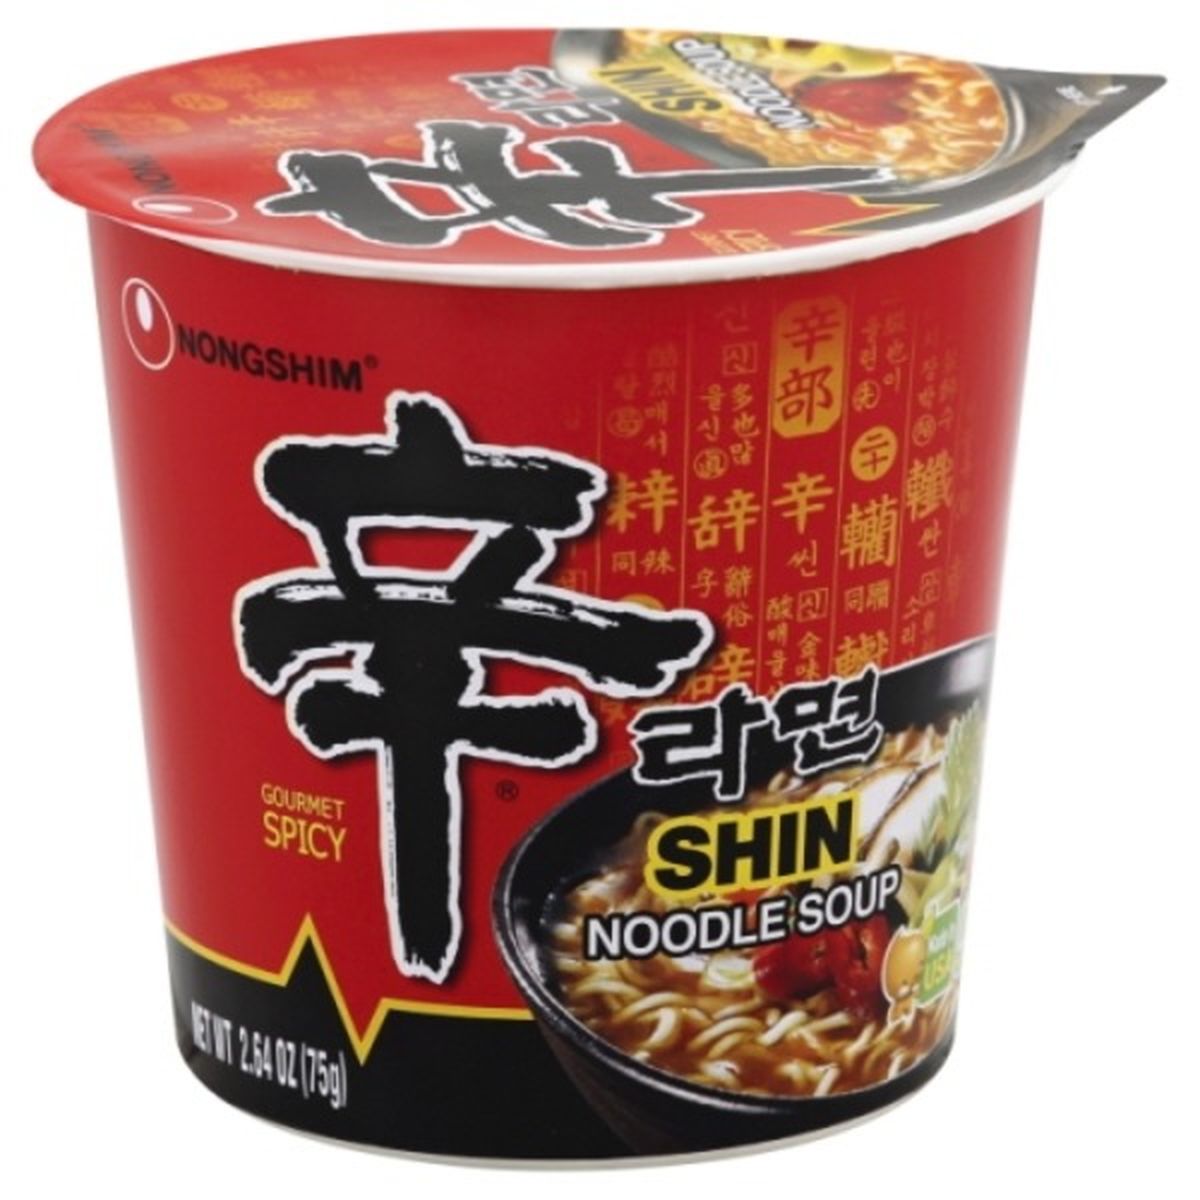 Calories in Nongshim Noodle Soup, Shin, Gourmet Spicy